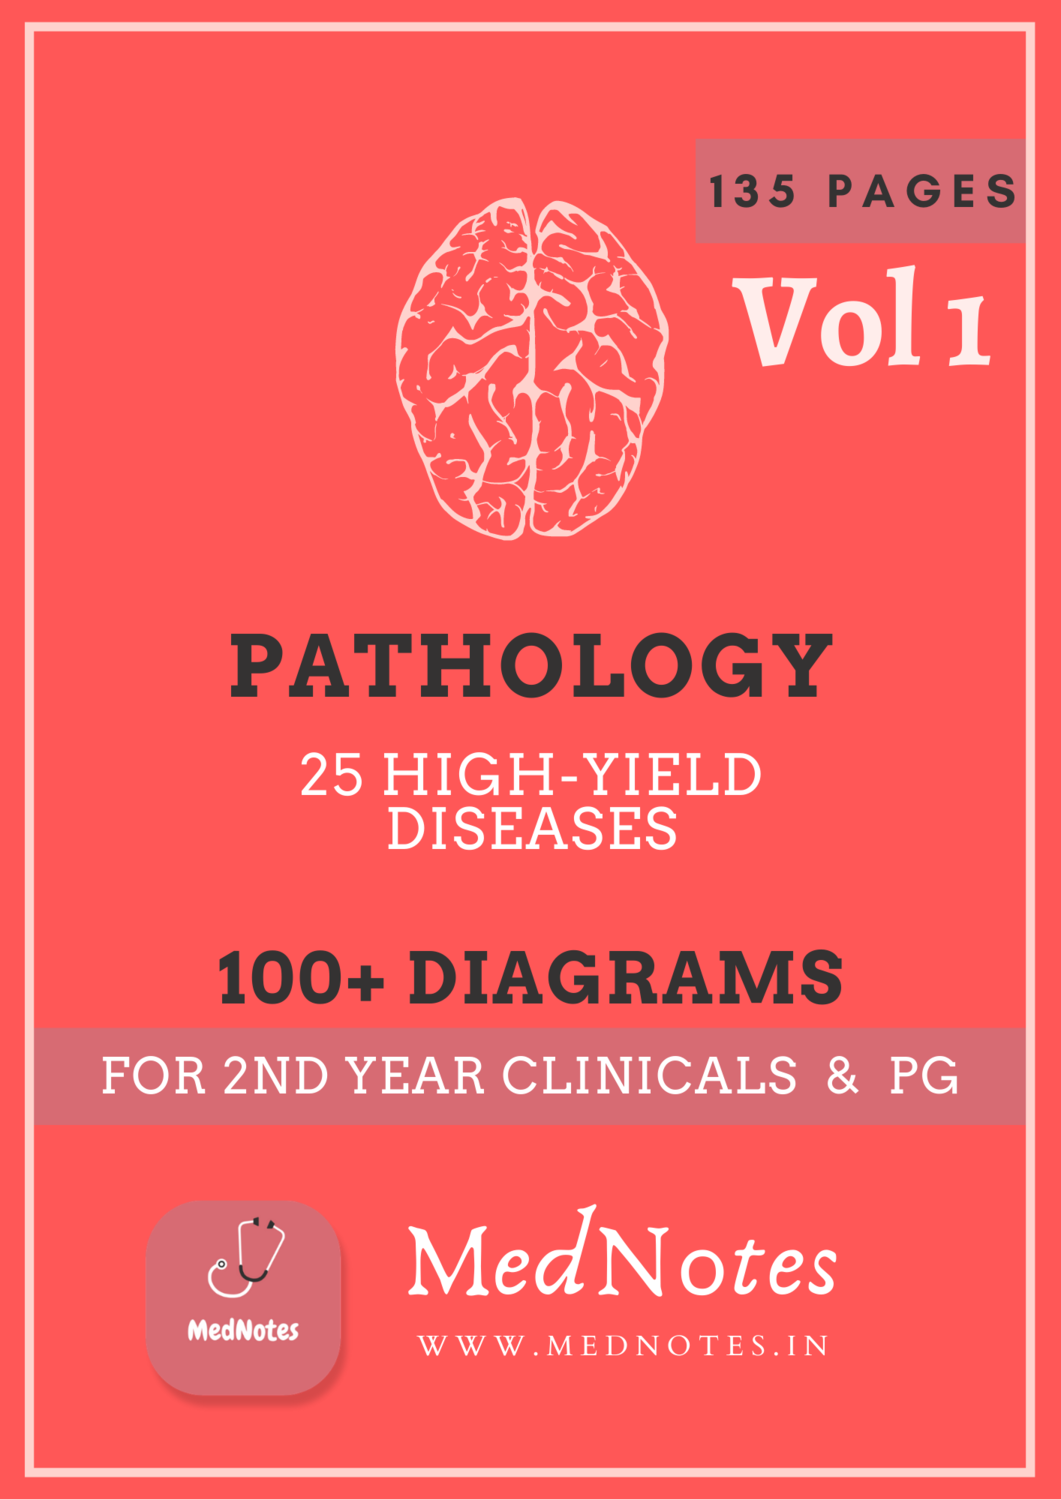 Pathology - 25 HIGH-YIELD DISEASES [ E-book] - Vol 1